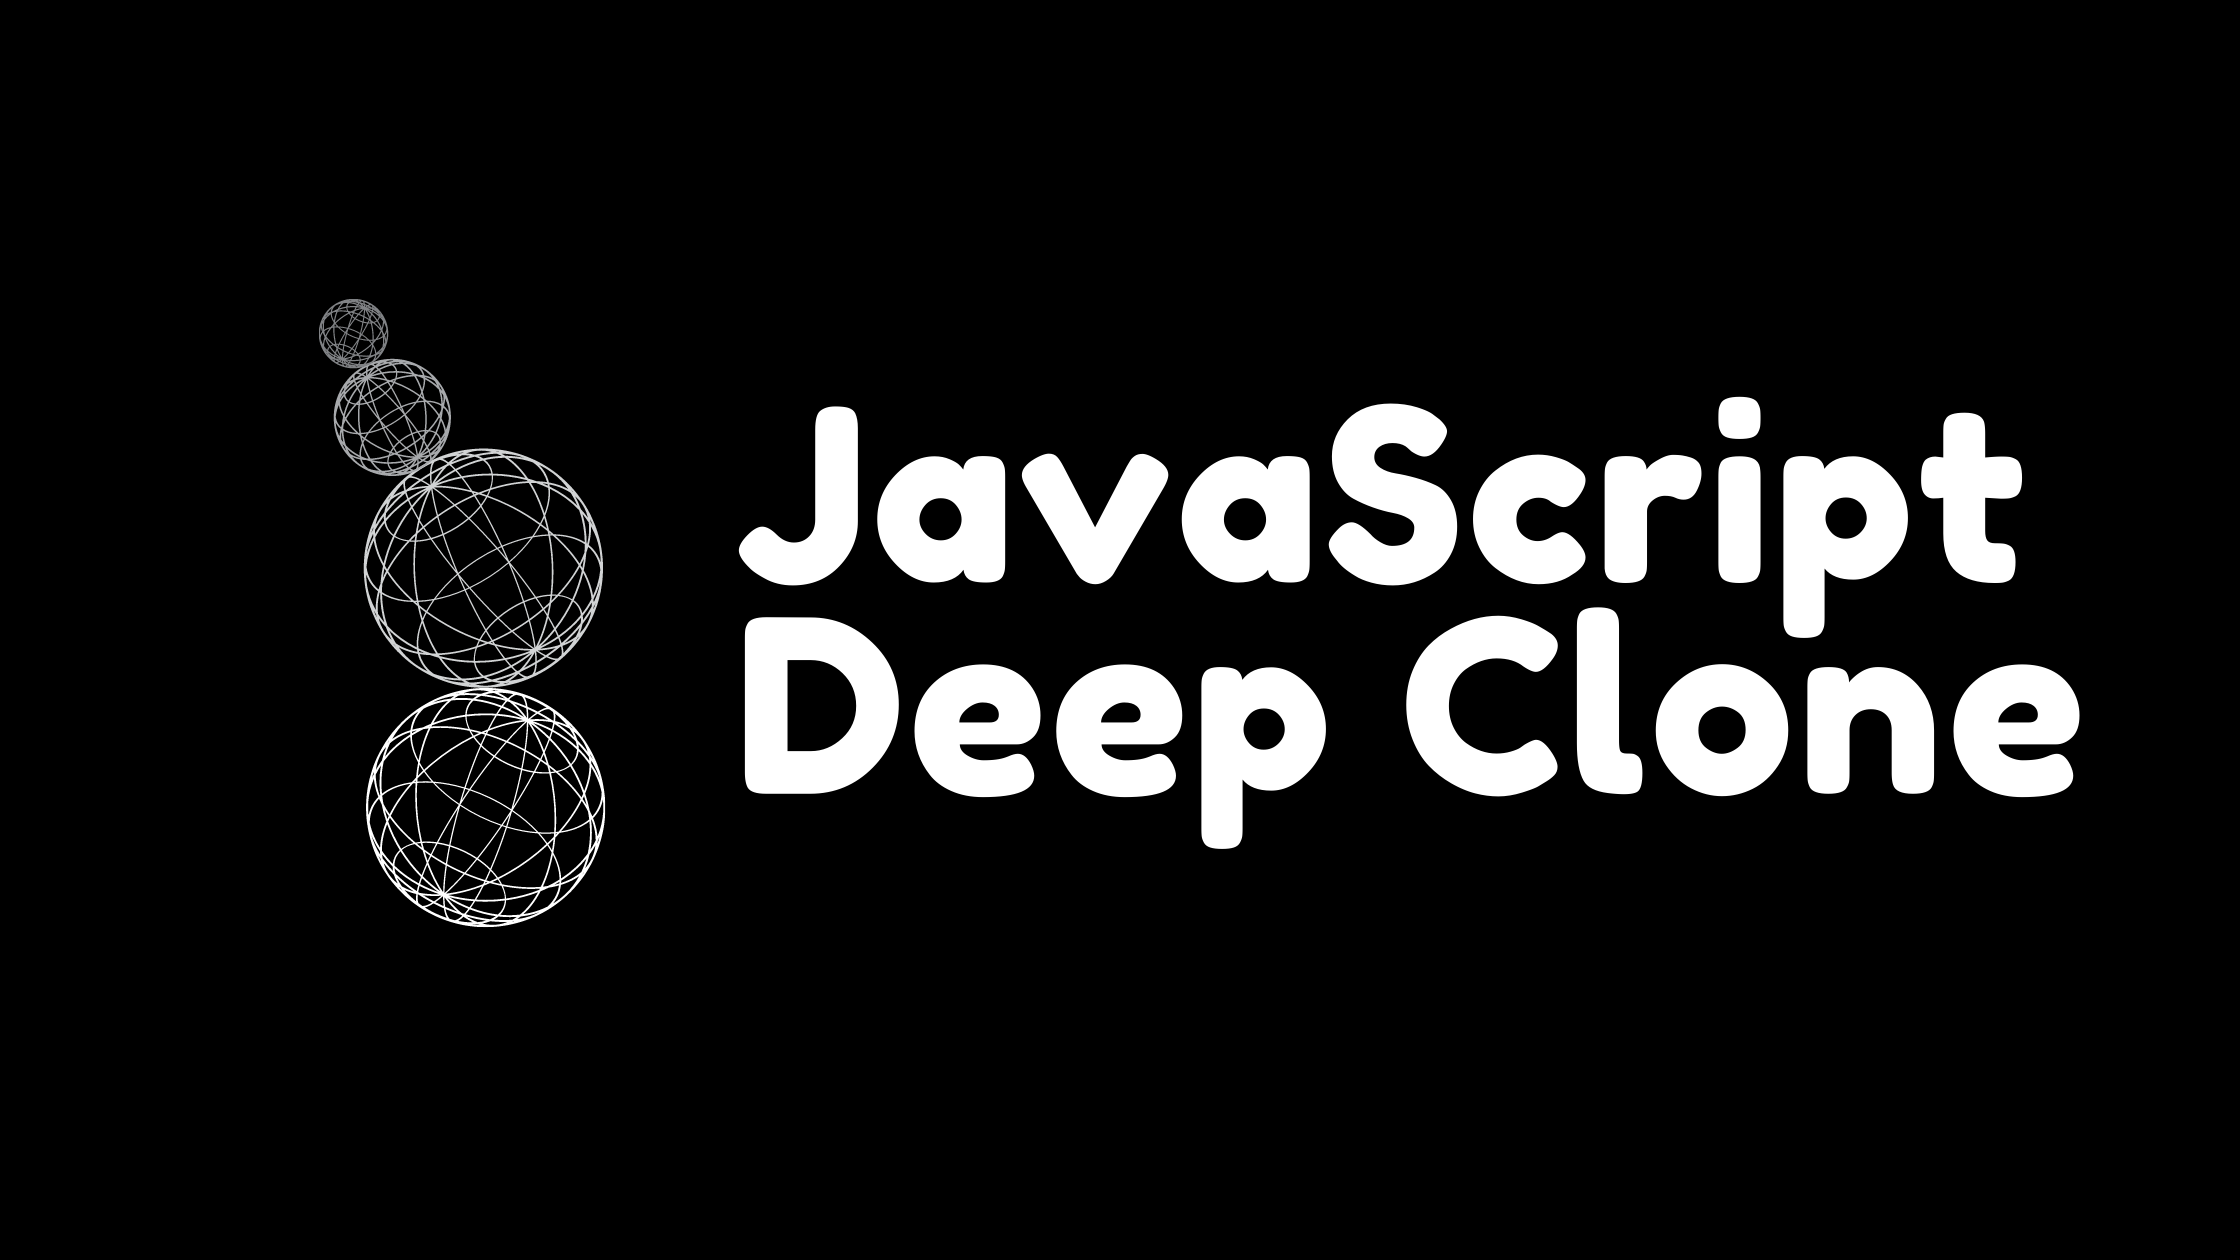 How to deep clone a JavaScript array